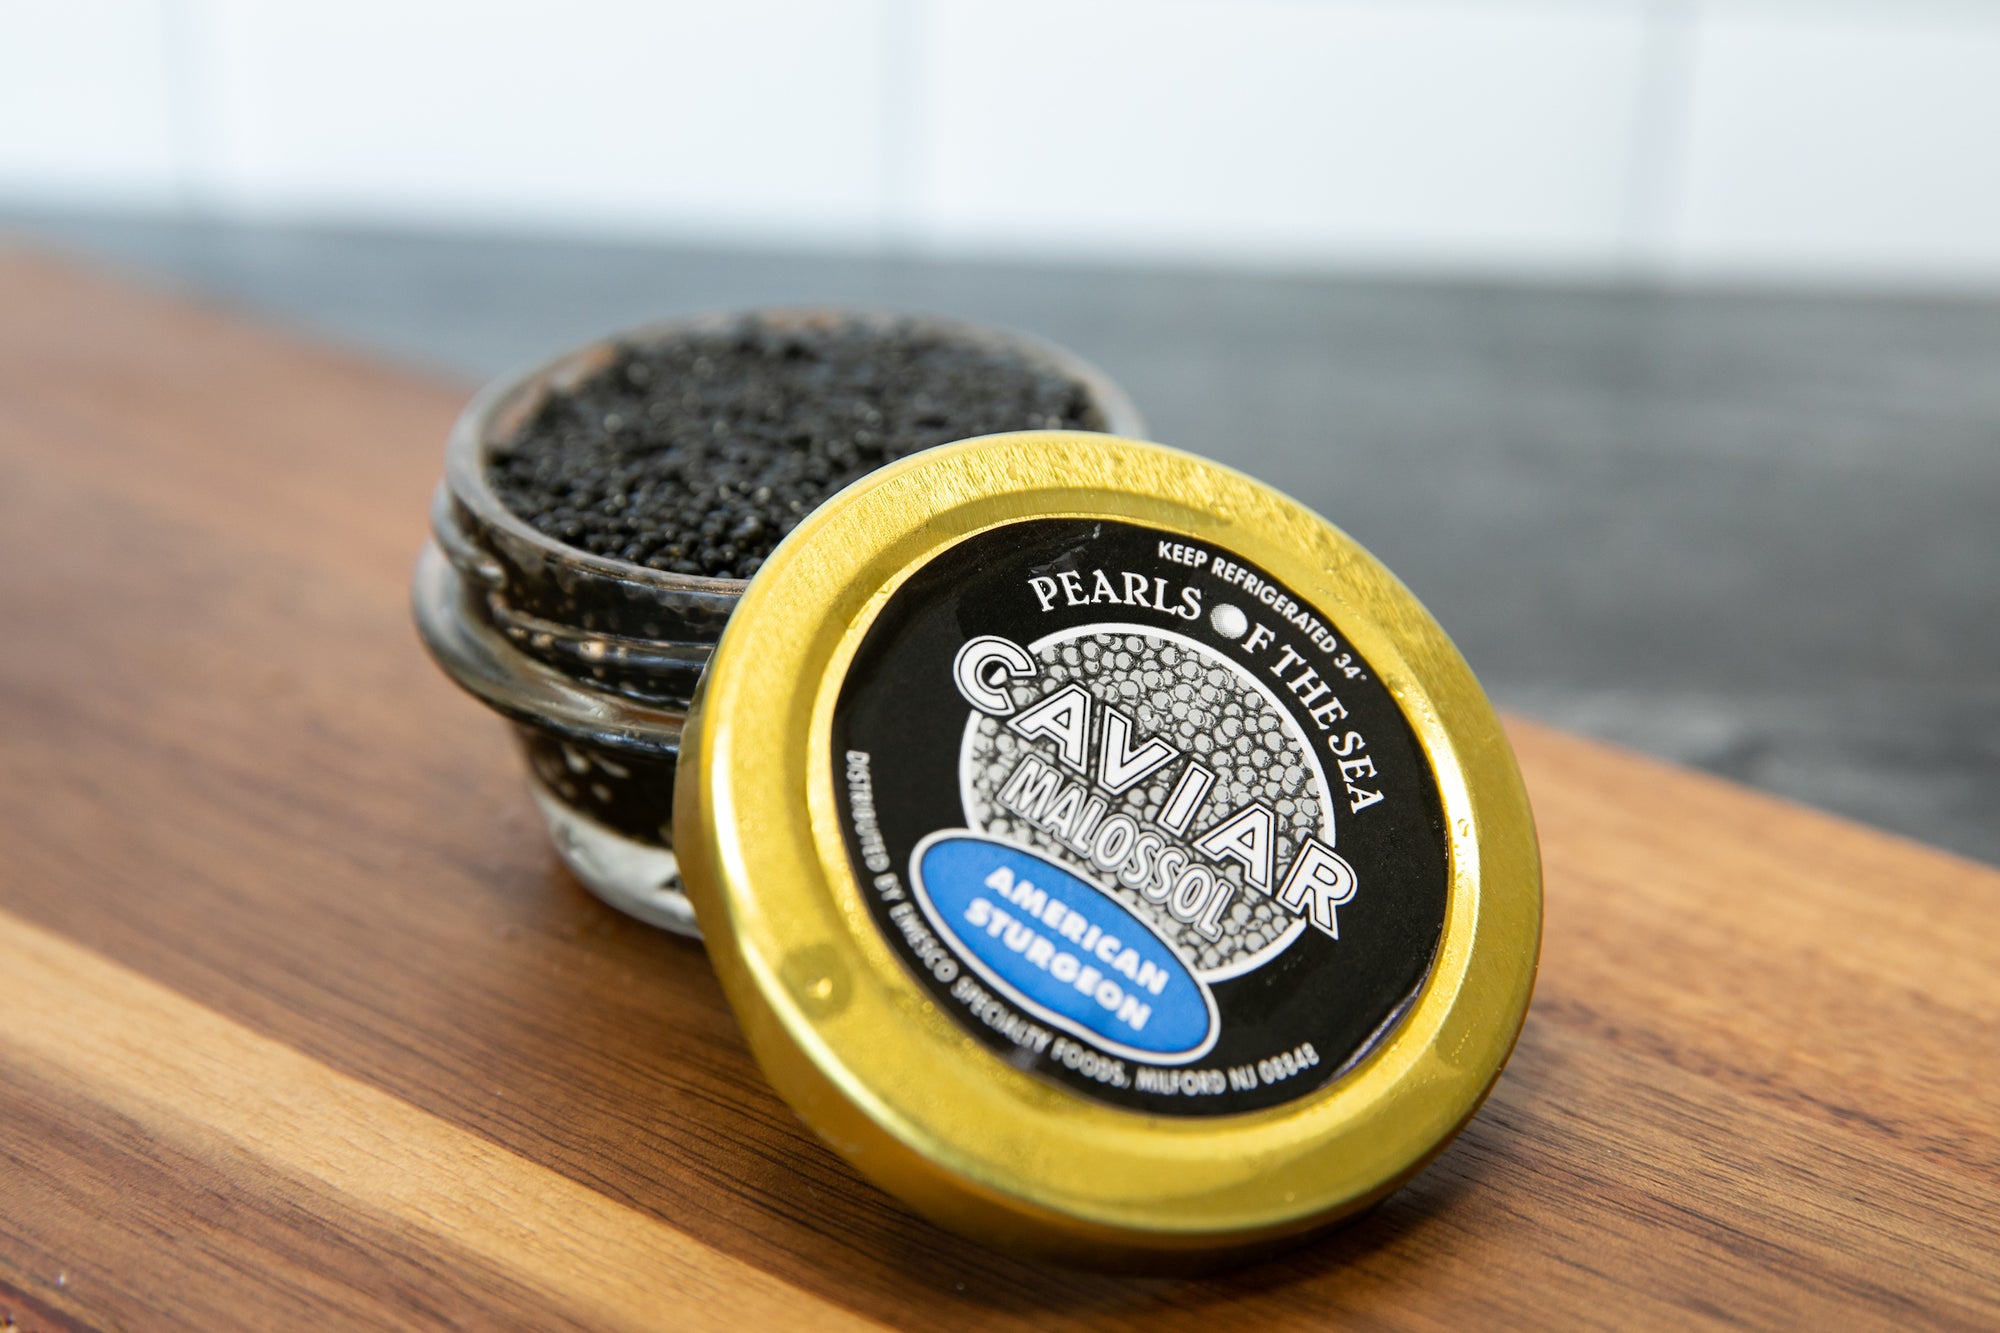 Buy American Sturgeon Caviar